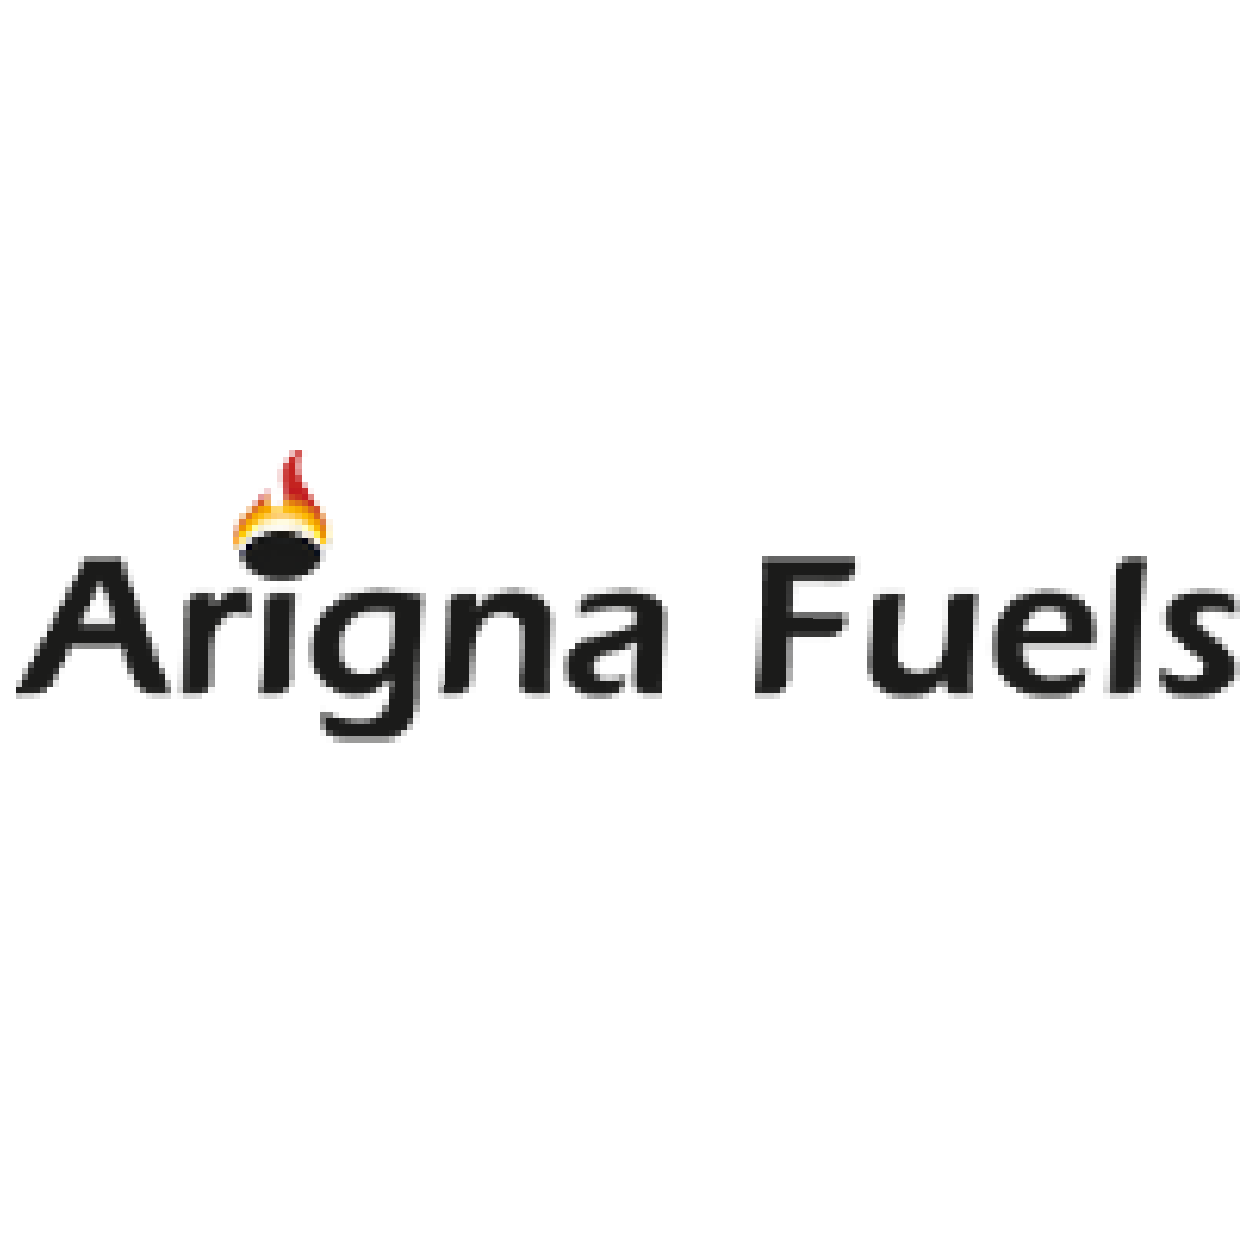 Arigna Fuels Ltd.